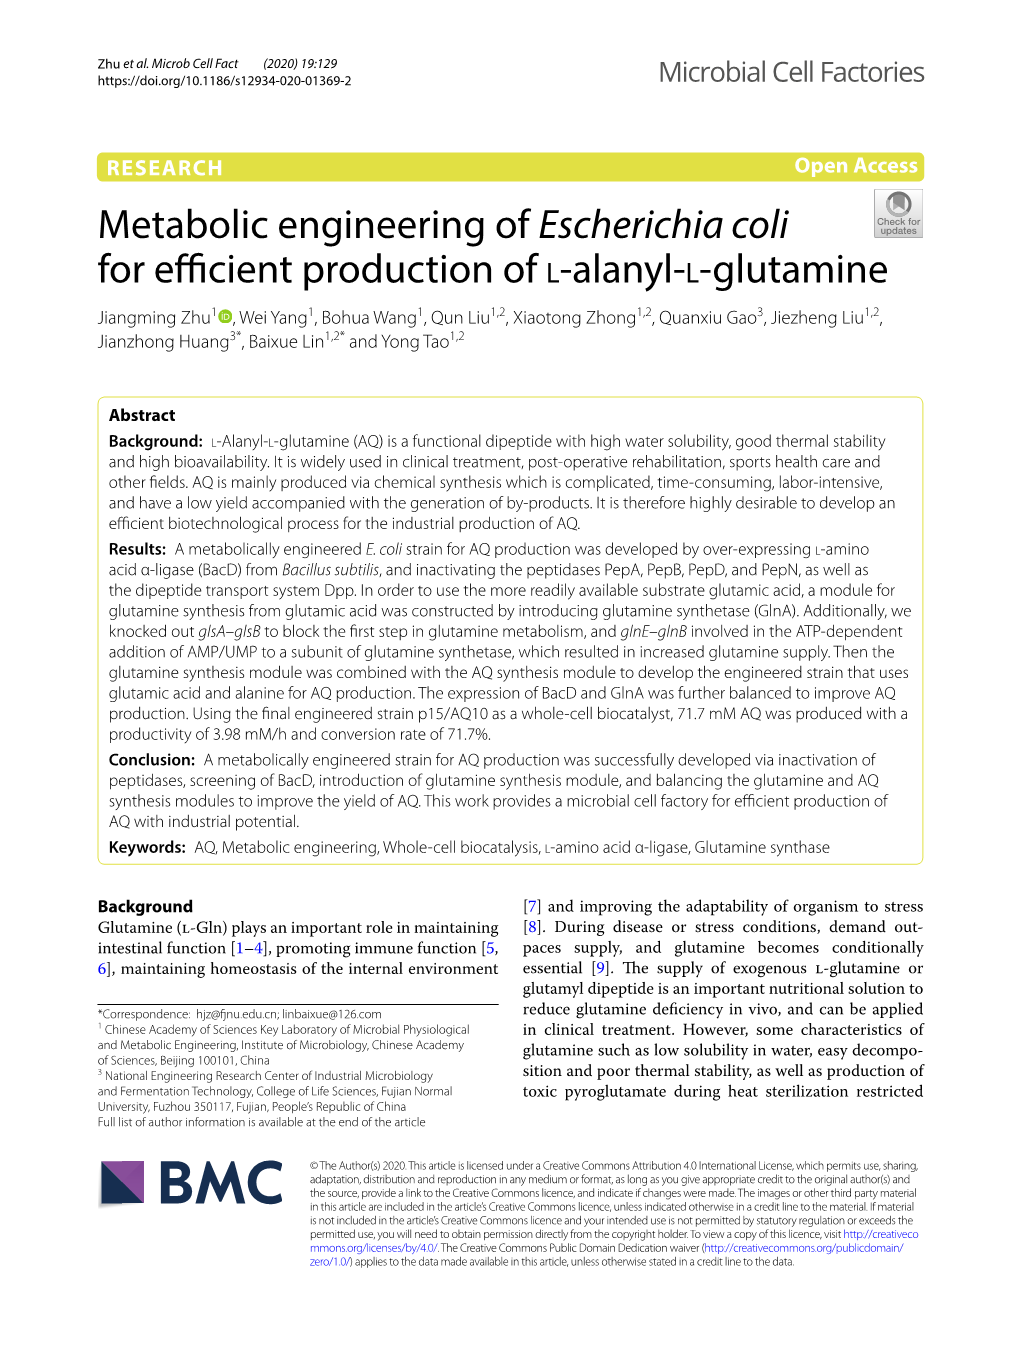 Metabolic Engineering of Escherichia Coli For